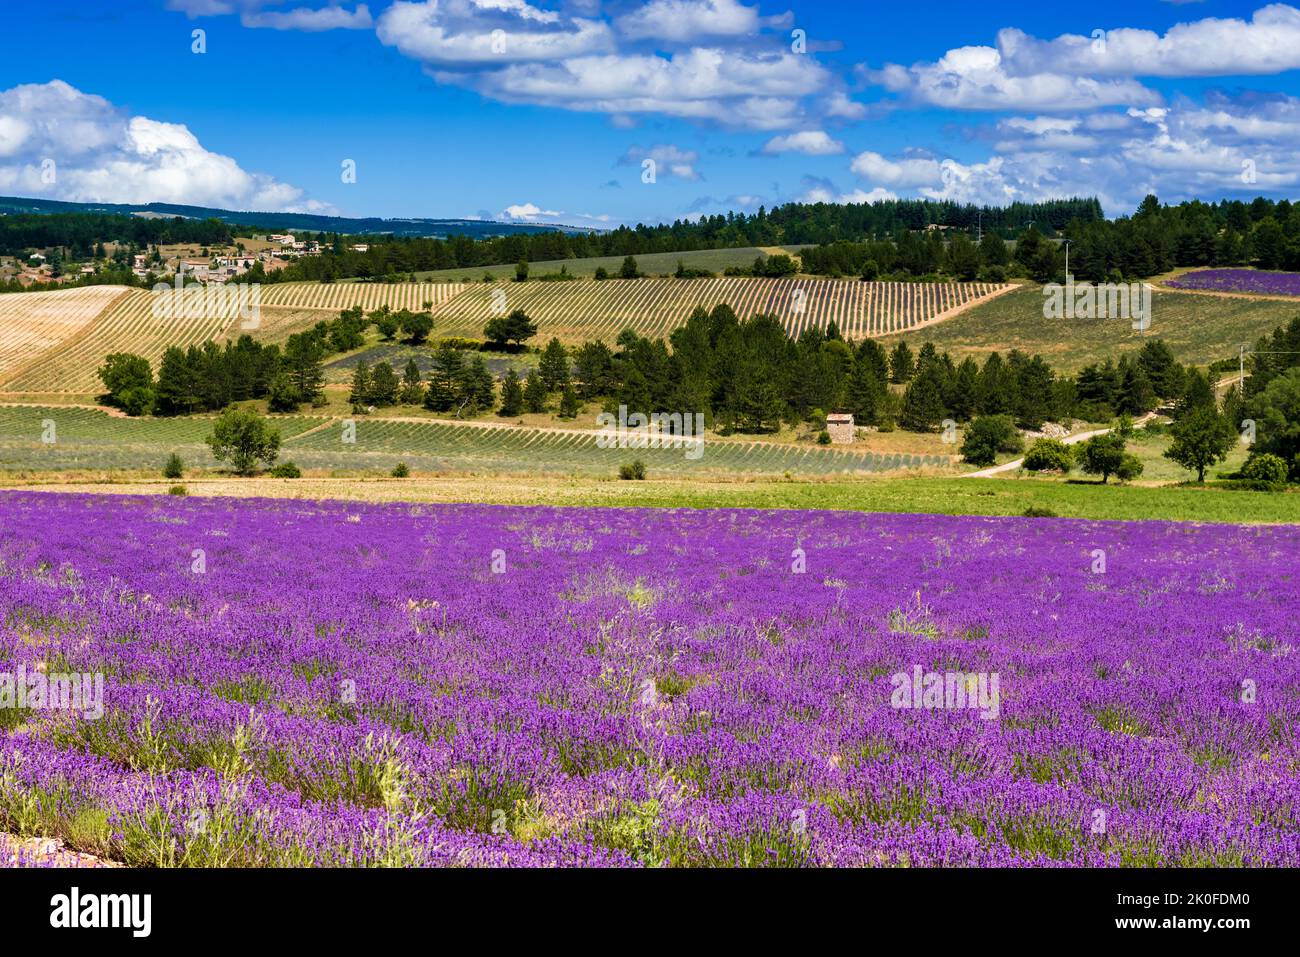 Lavender fields near Sault, Vaucluse, France Stock Photo